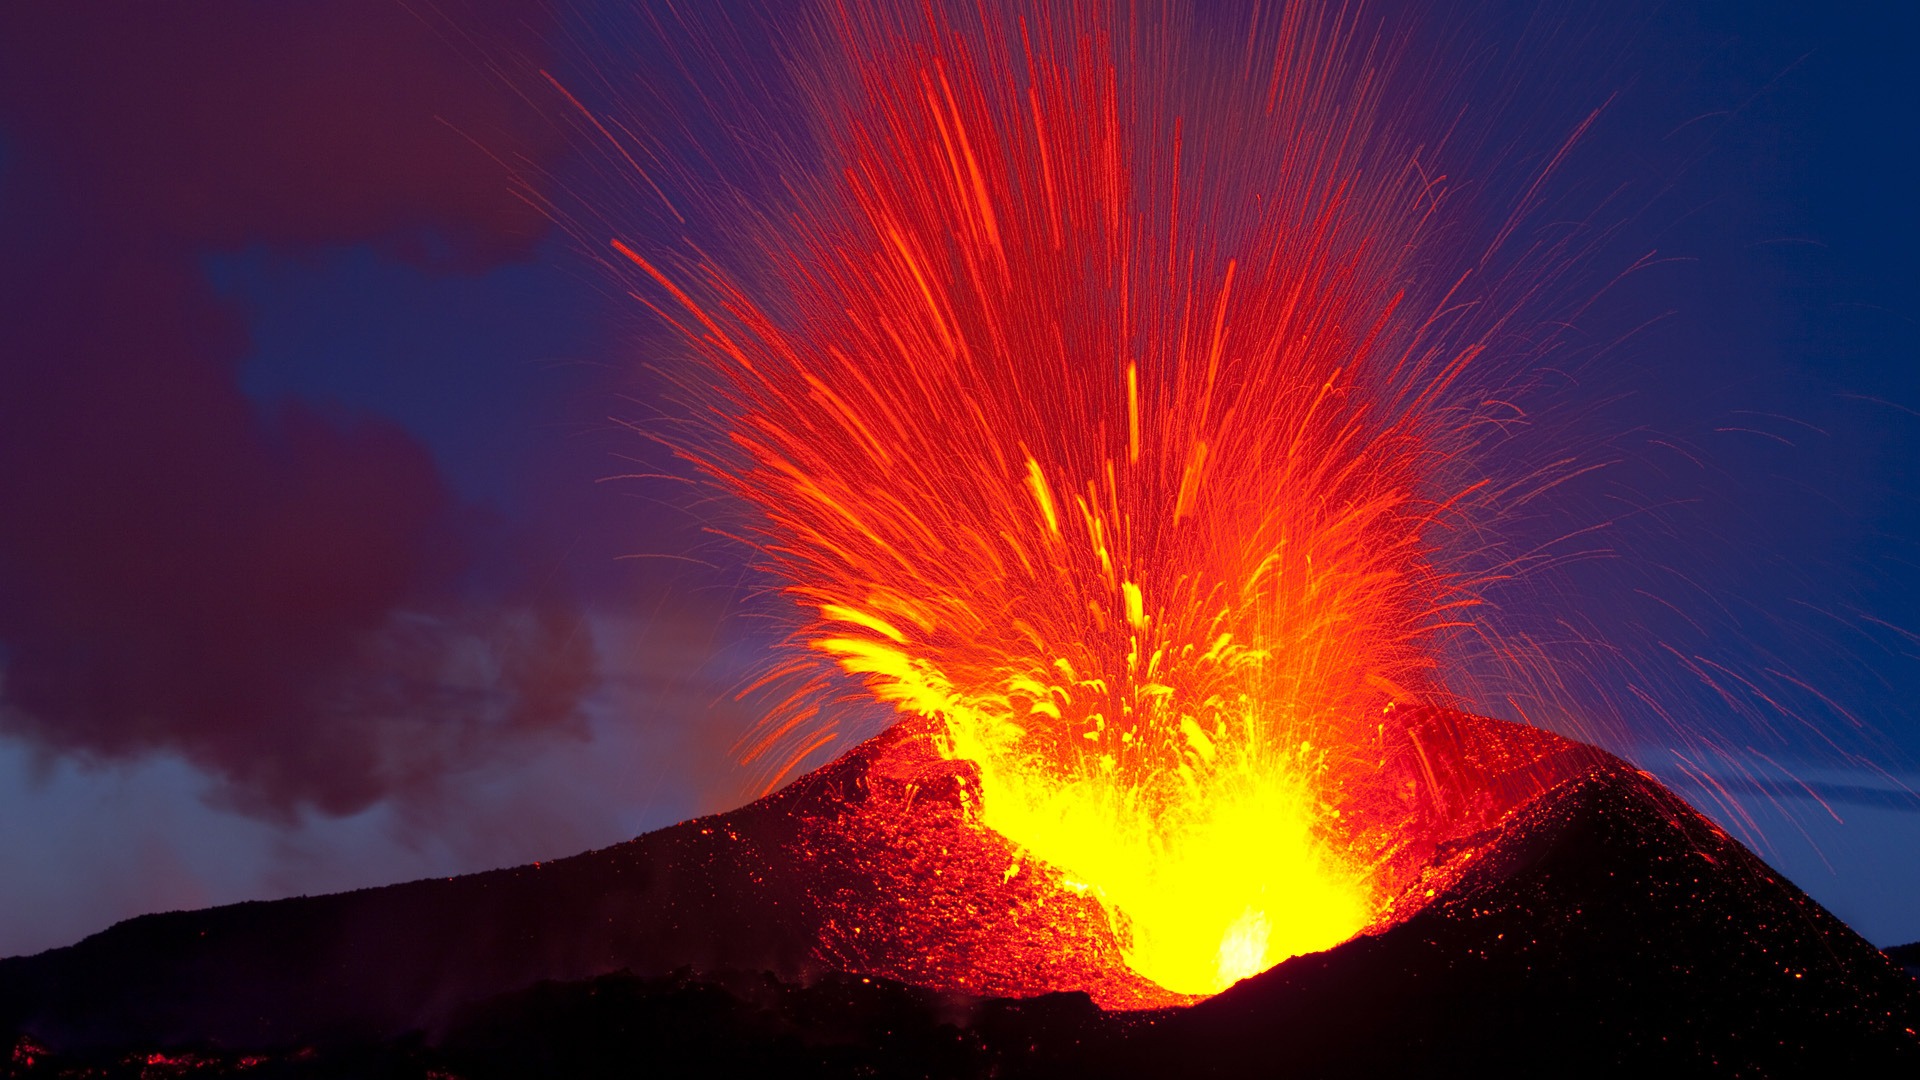 Volcano lava eruption, Night HD wallpaper, Nature's fury, Mesmerizing beauty, 1920x1080 Full HD Desktop